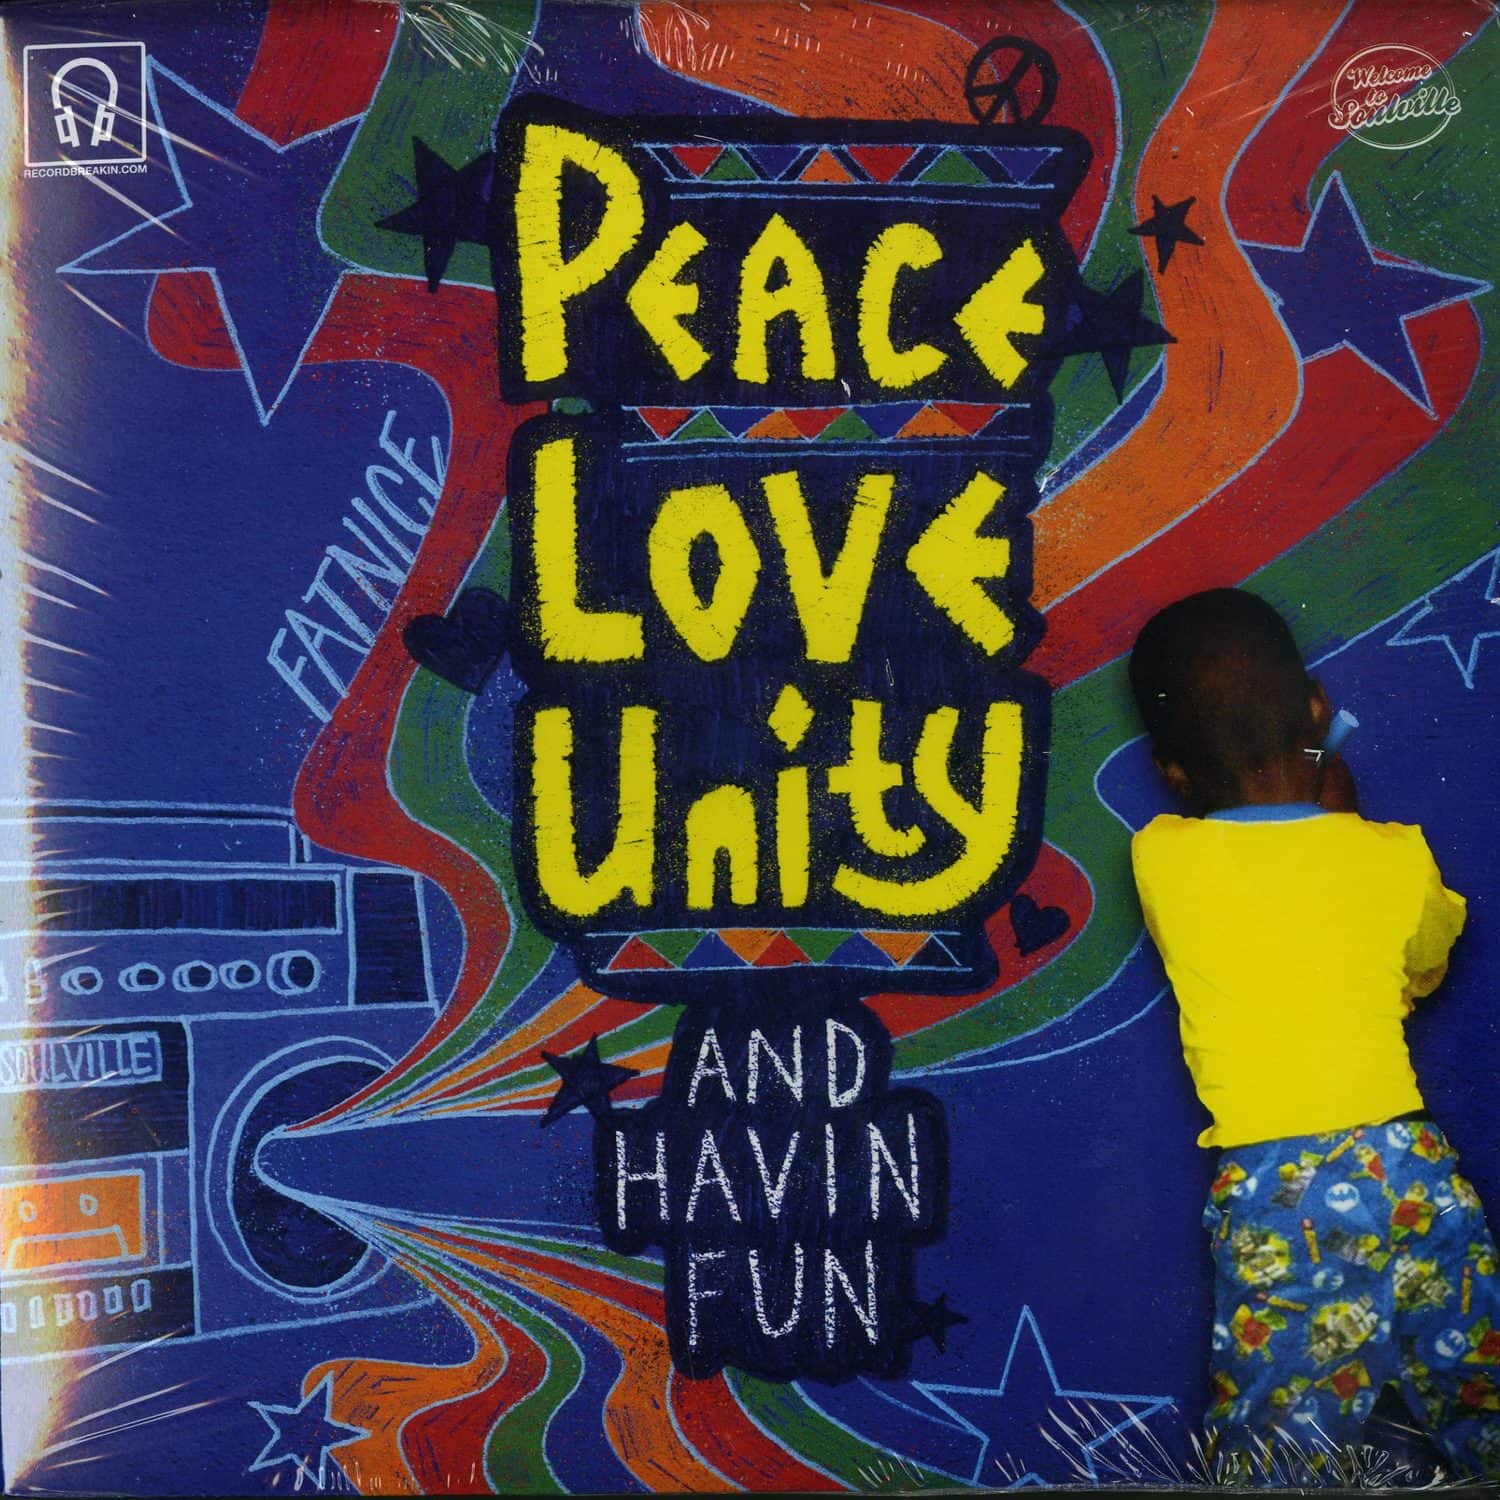 Fatnice - PEACE LOVE UNITY AND HAVING FUN 